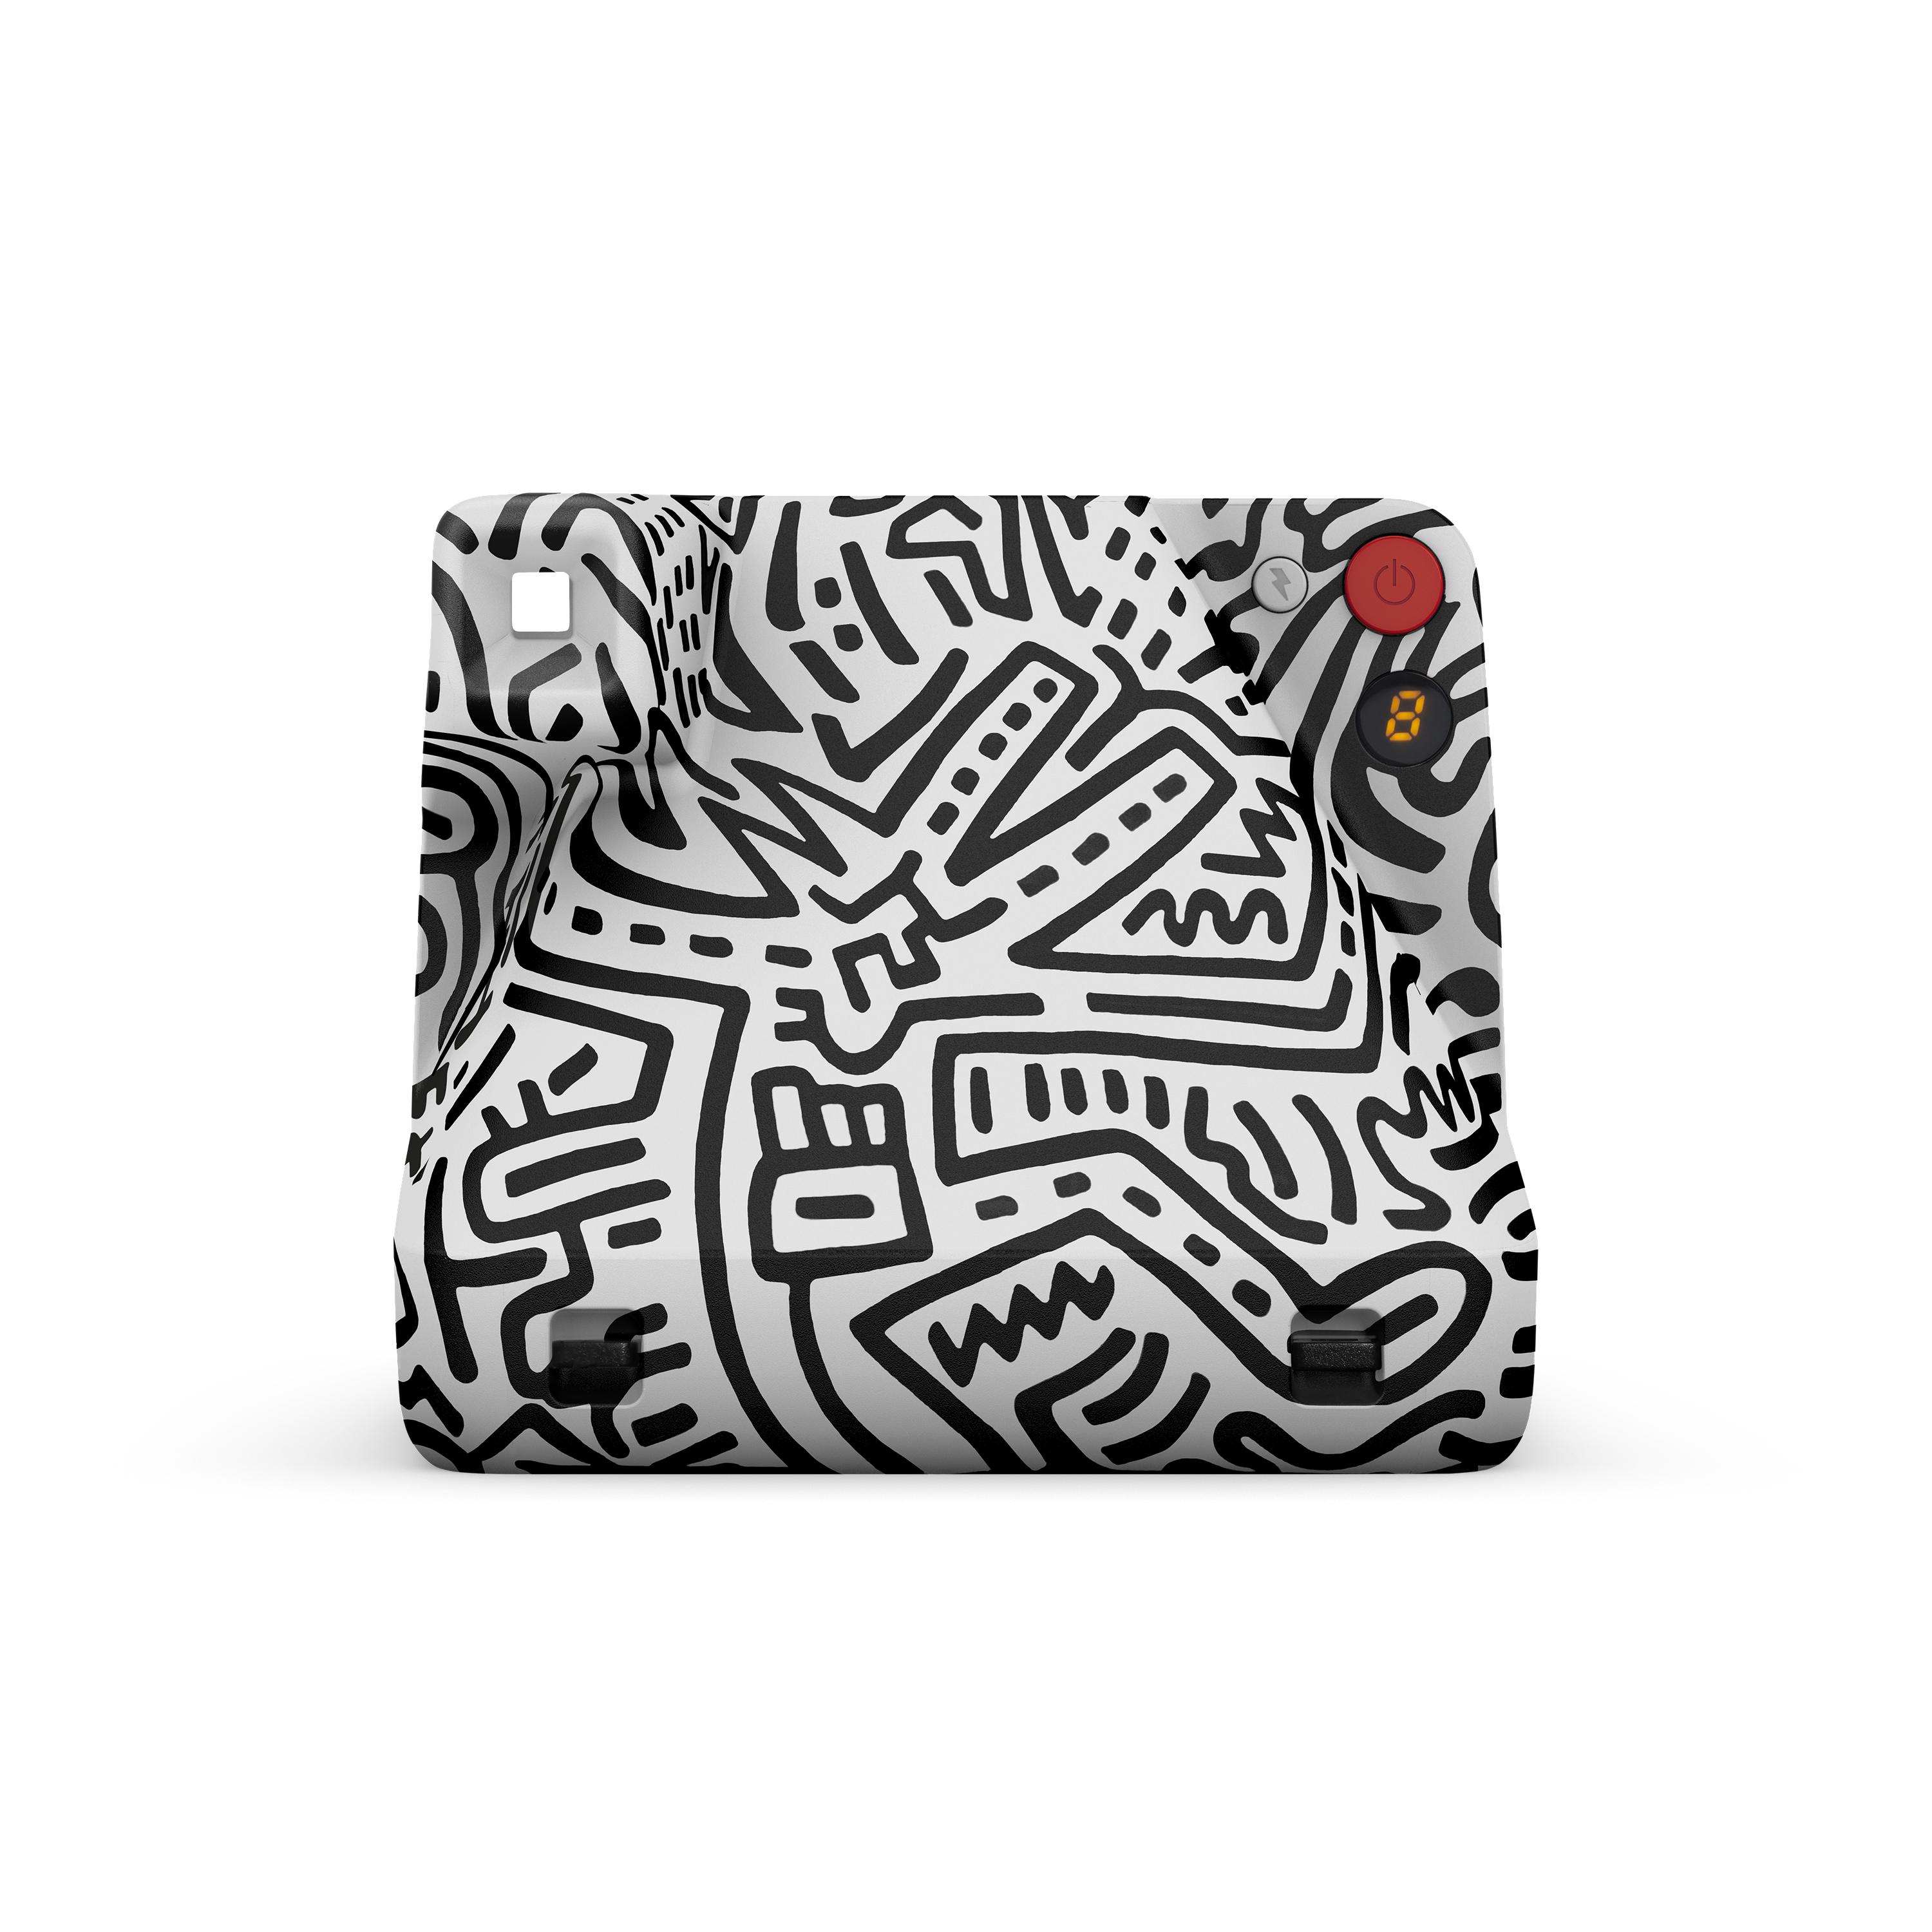 POLAROID Now Keith Haring 2021 2021 Sofortbildkamera, Keith Haring